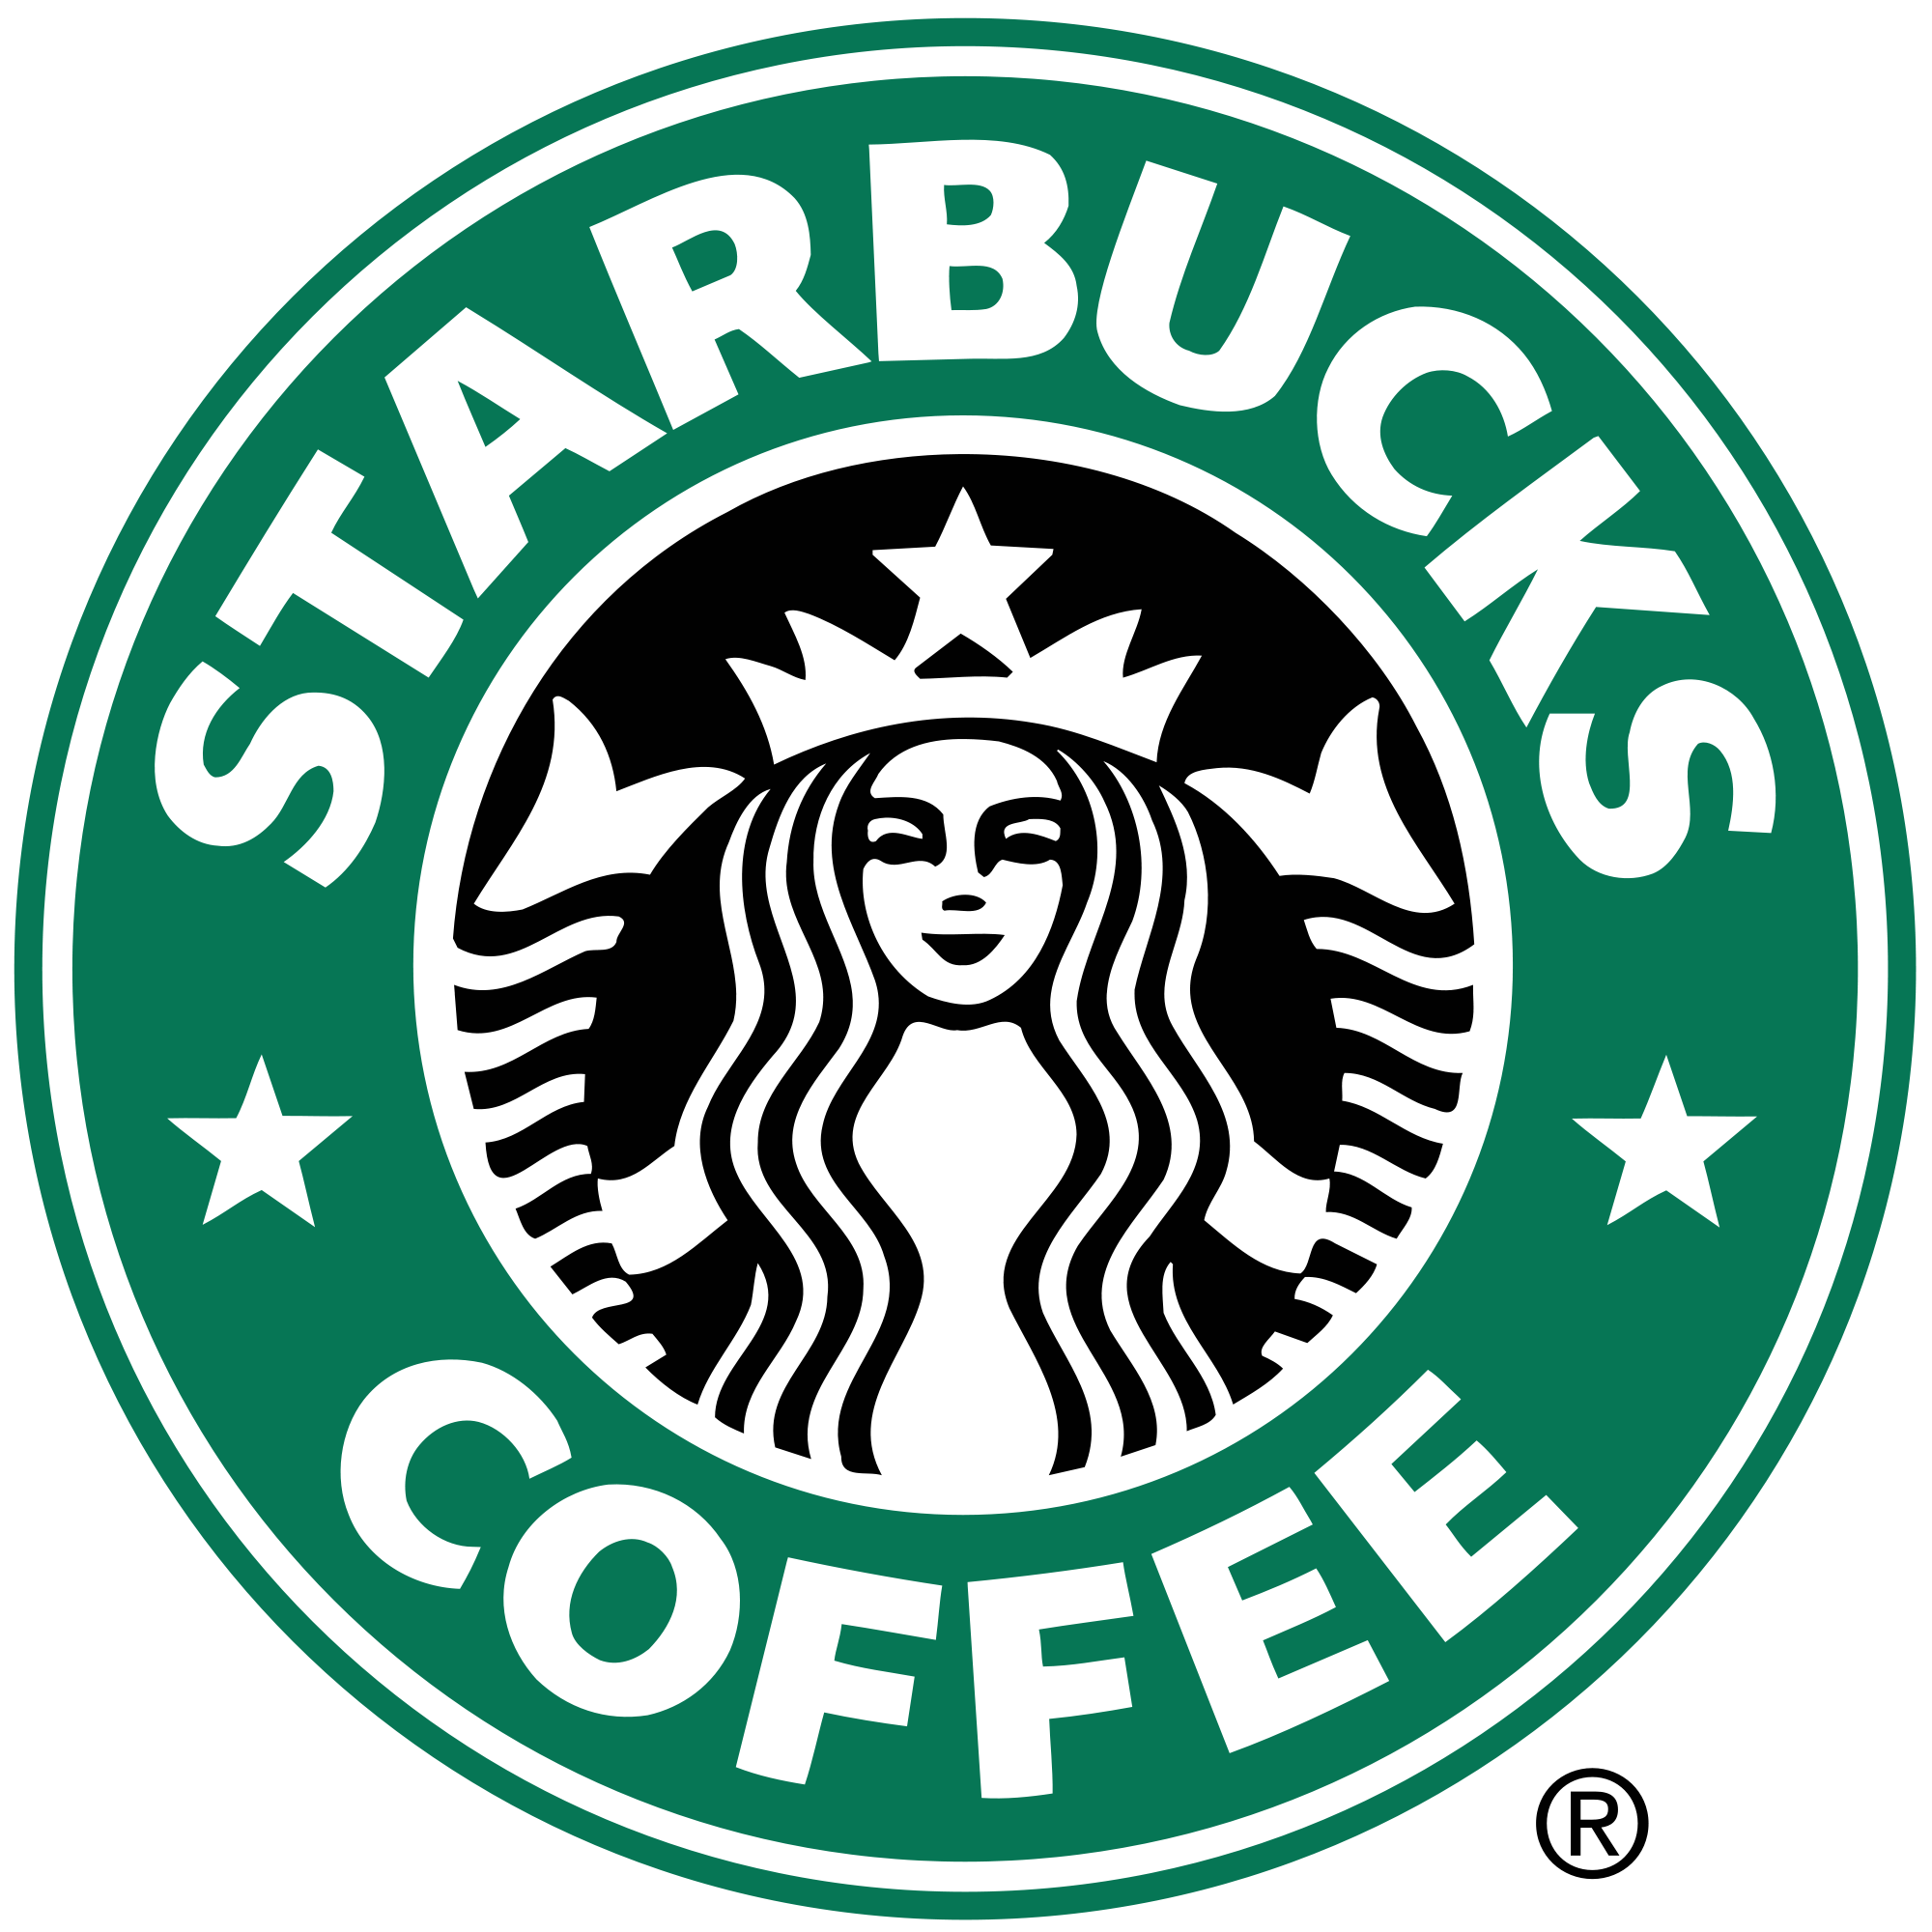 Download Image - Starbucks Coffee Logo.svg.png | Logopedia | FANDOM ...